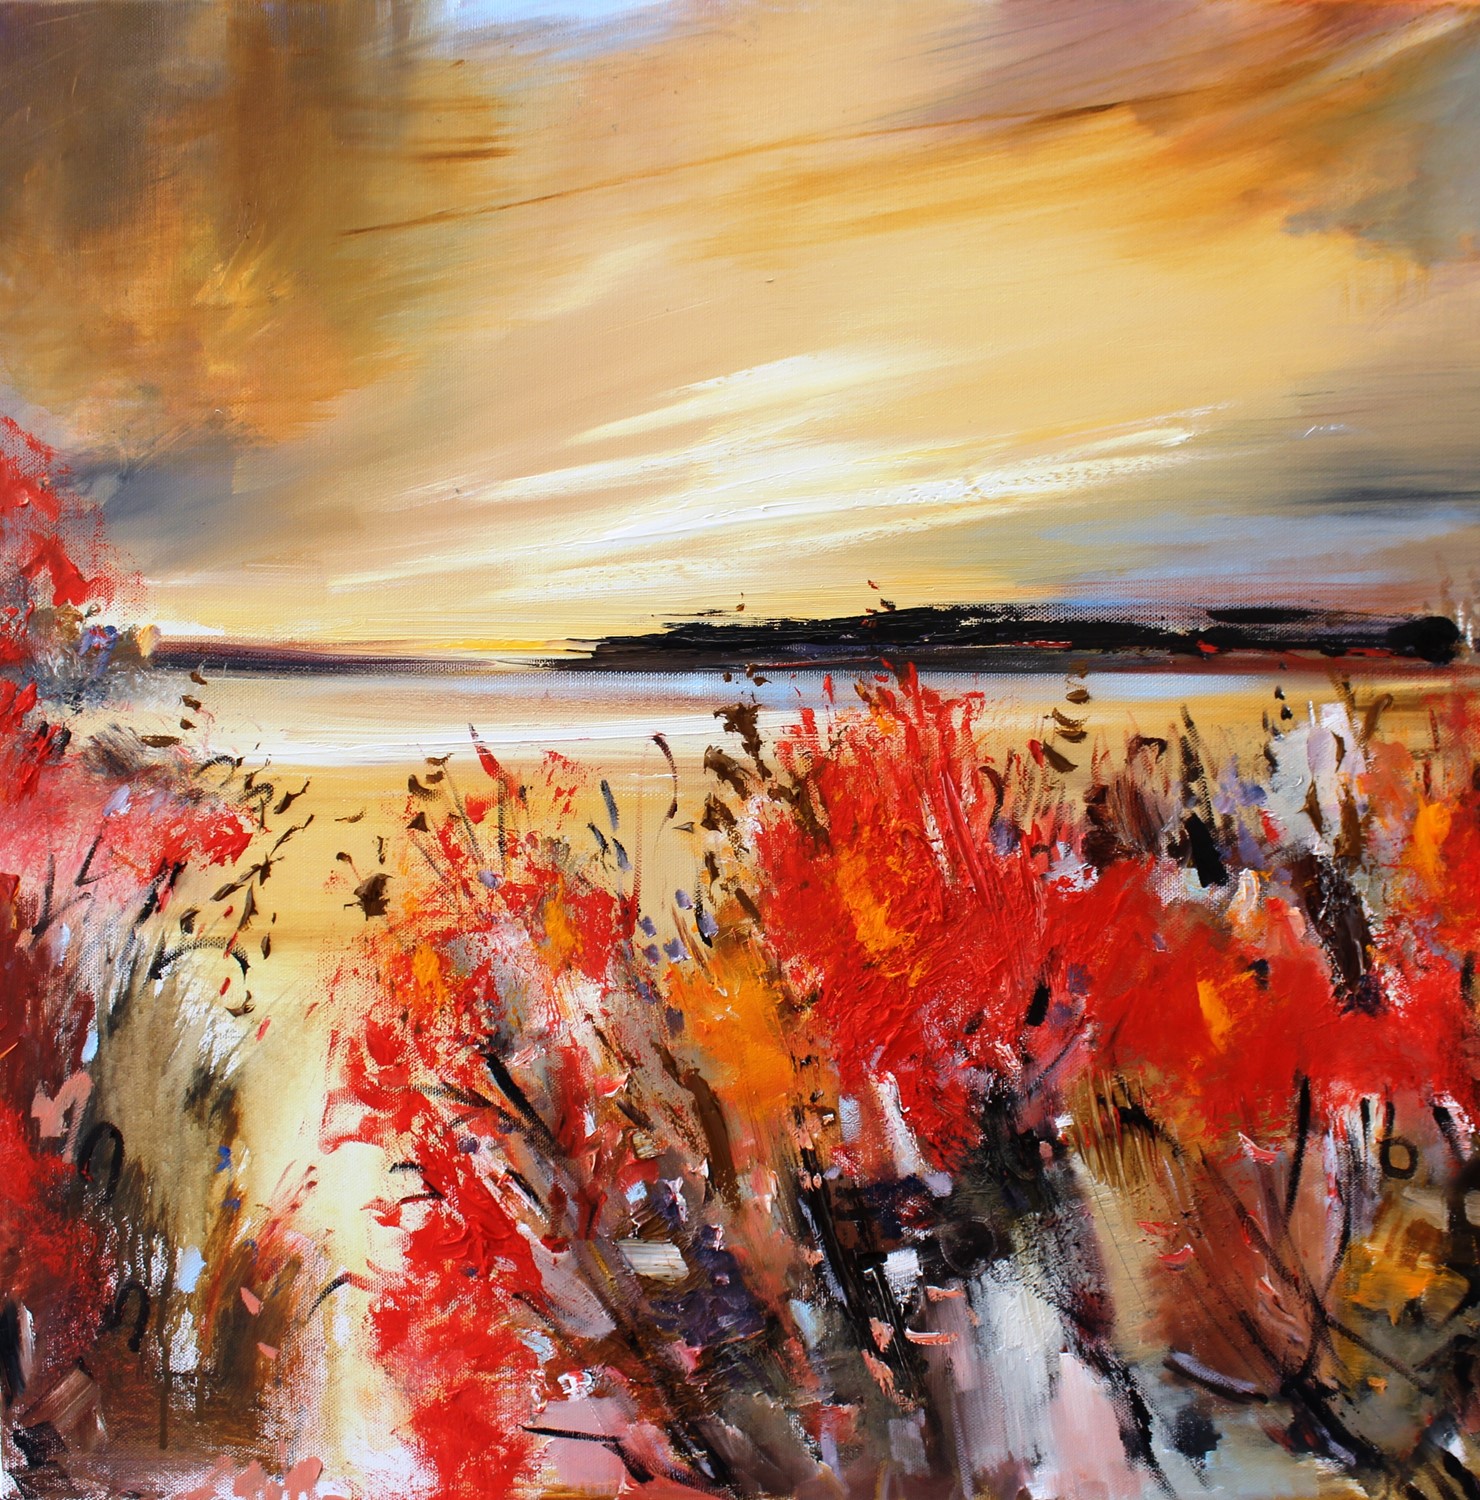 'Colourful Autumn' by artist Rosanne Barr